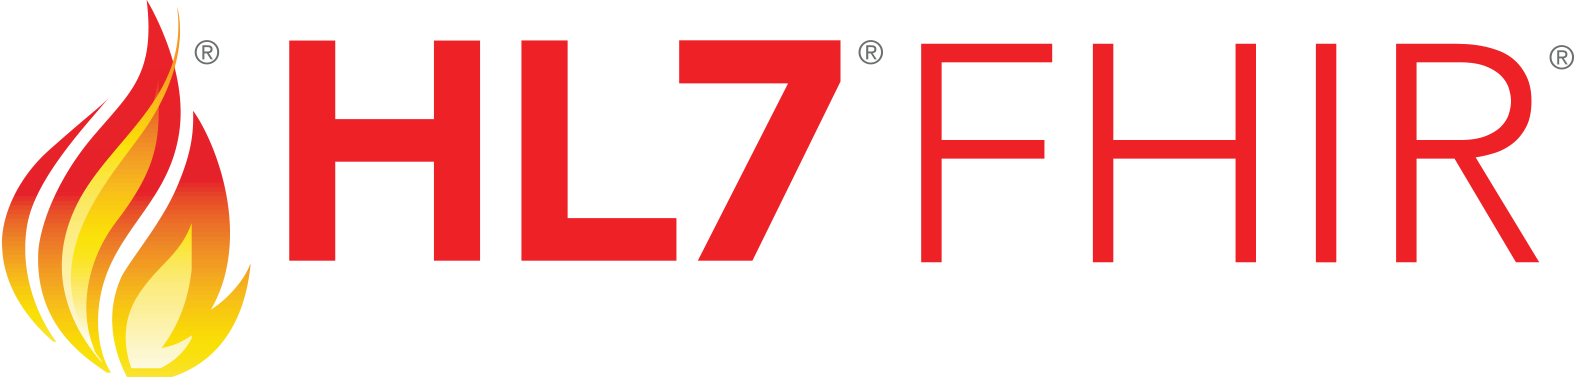 Logo do HL7 FHIR 